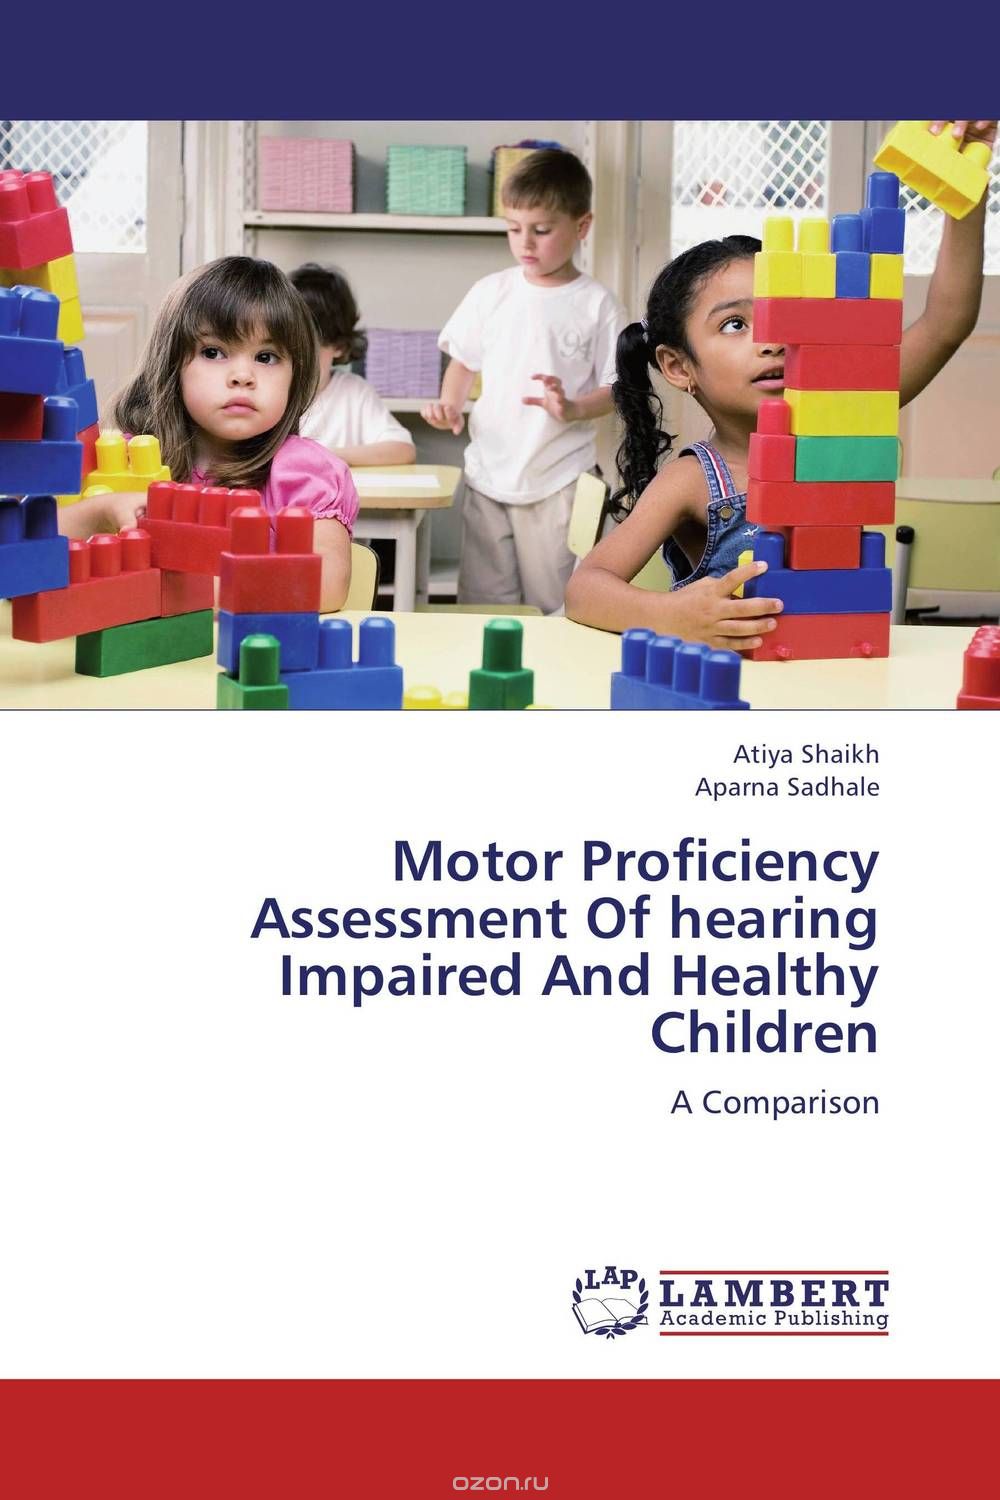 Скачать книгу "Motor Proficiency Assessment Of hearing Impaired And Healthy Children"